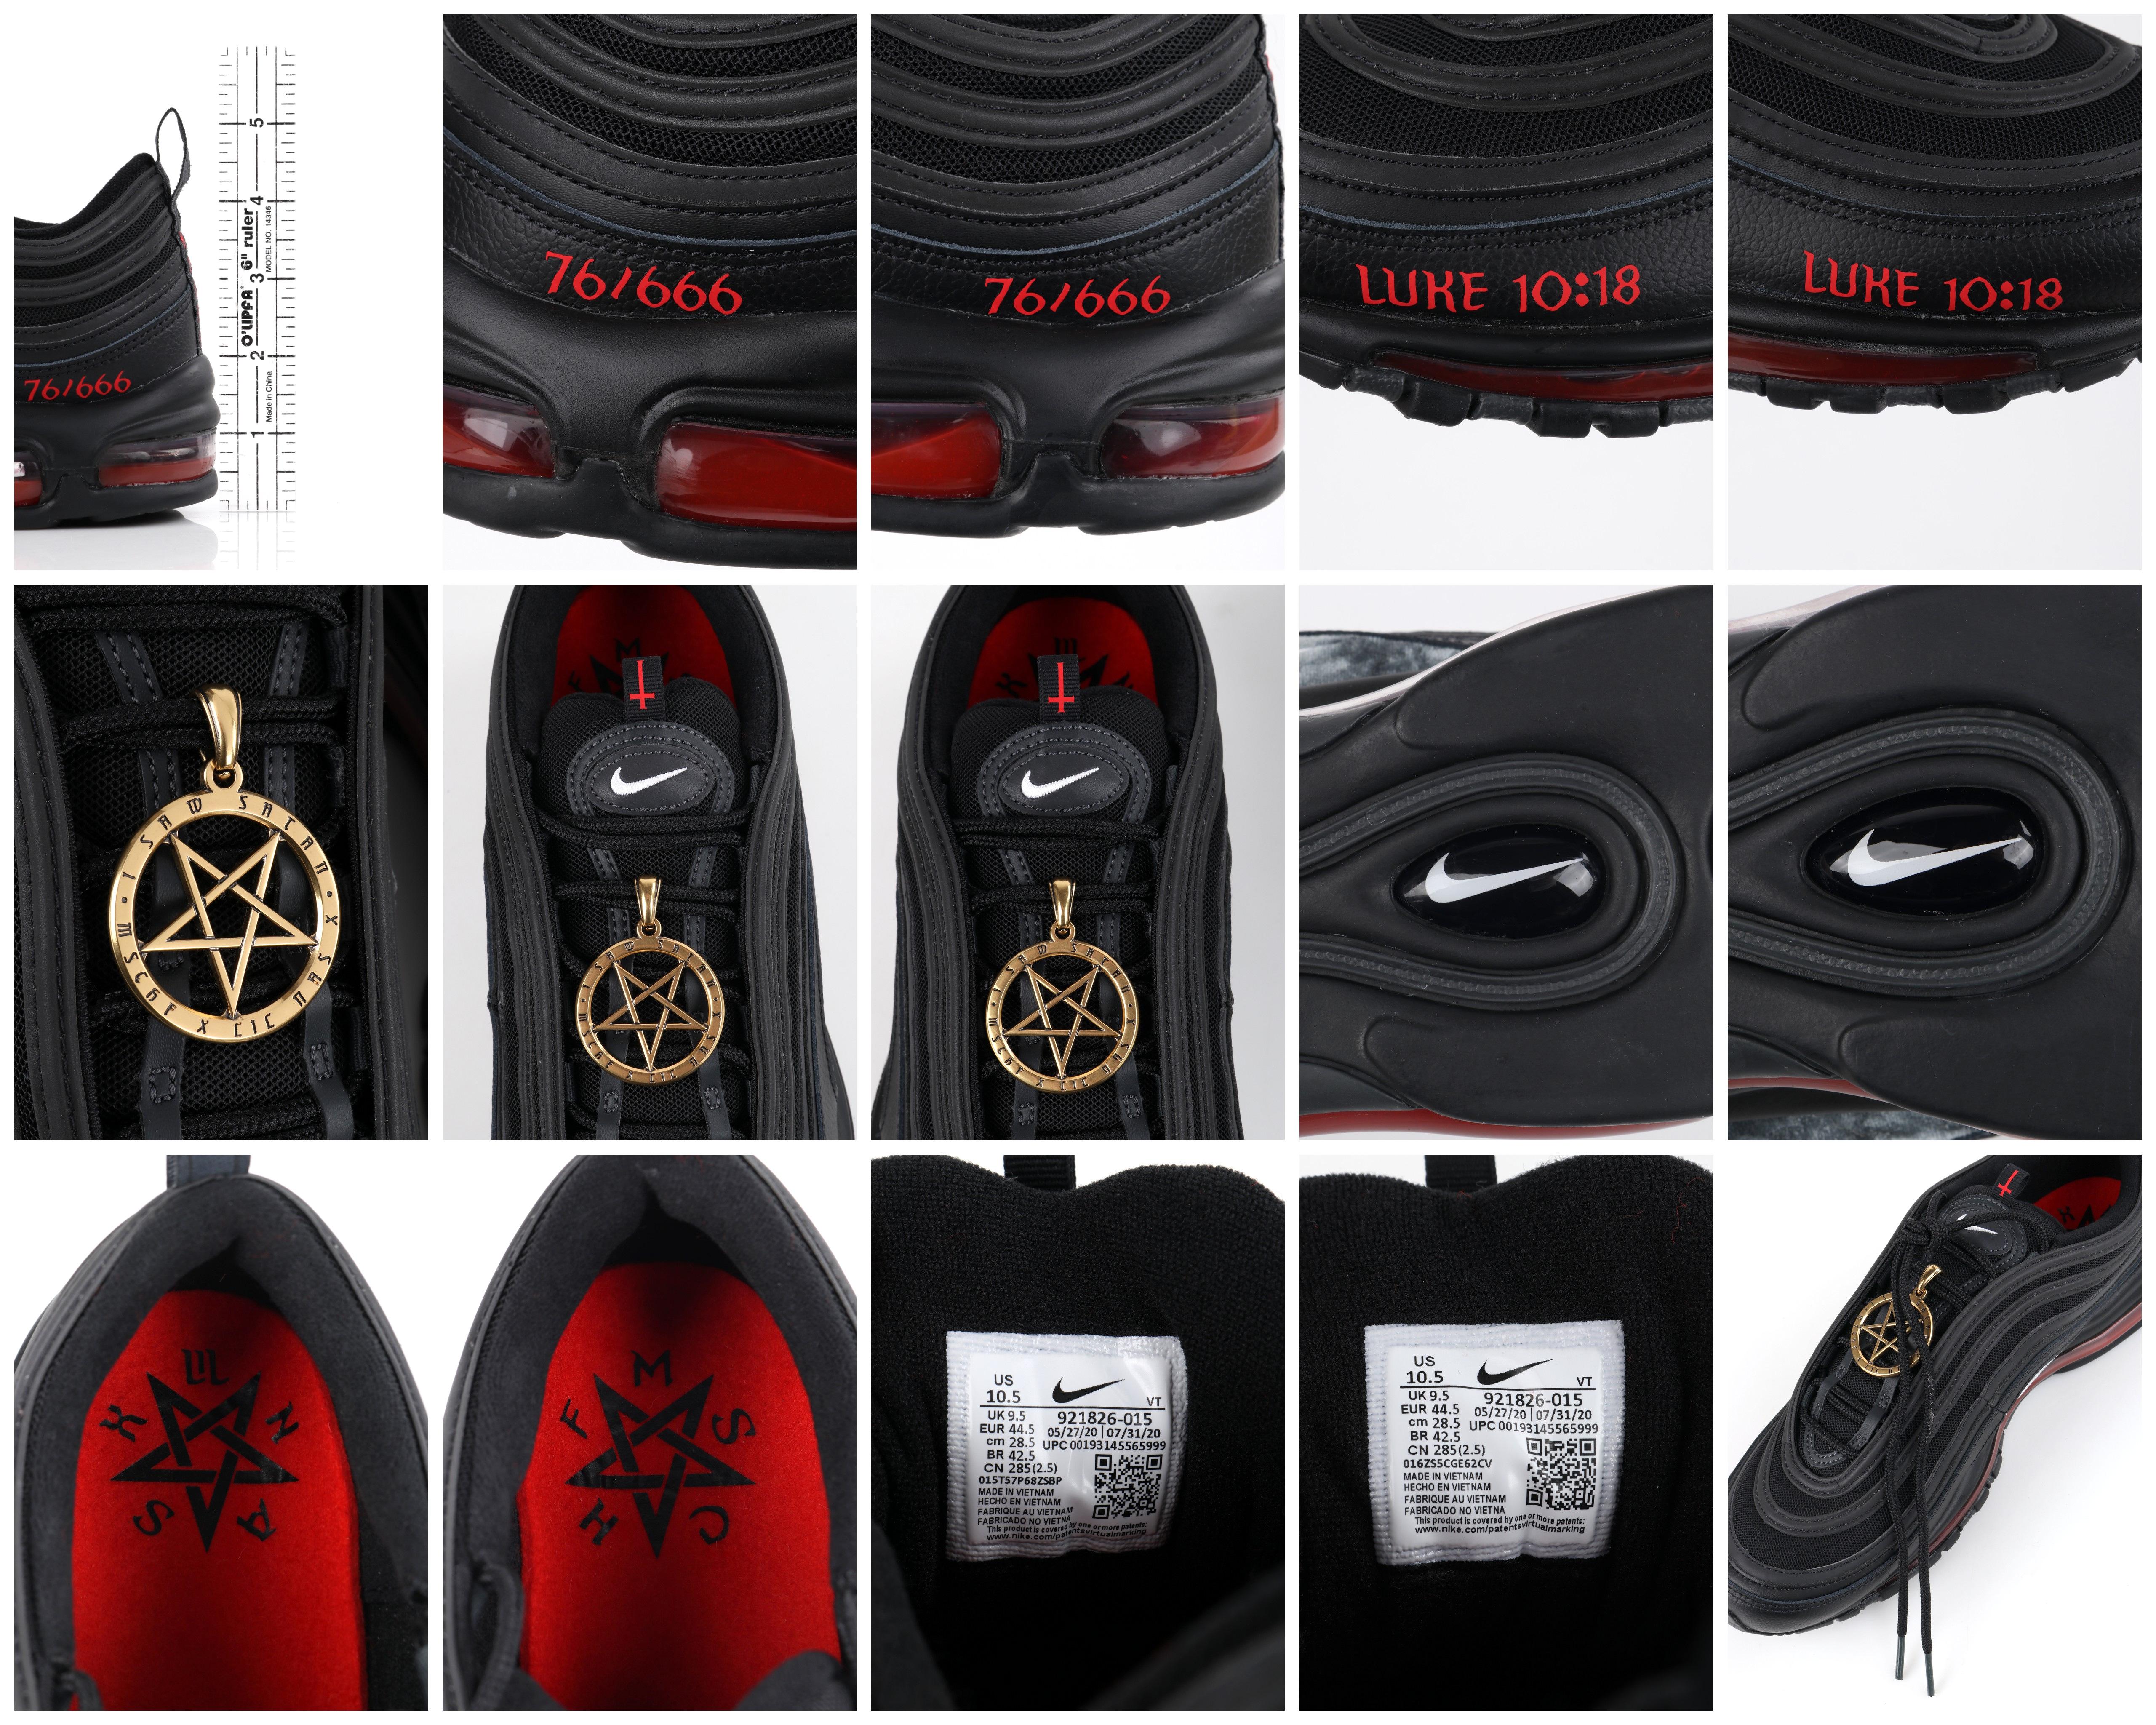 Baskets Nike Air Max noires en édition limitée 76/666 NIB MSCHF & Lil Nas X « Satan » en vente 3